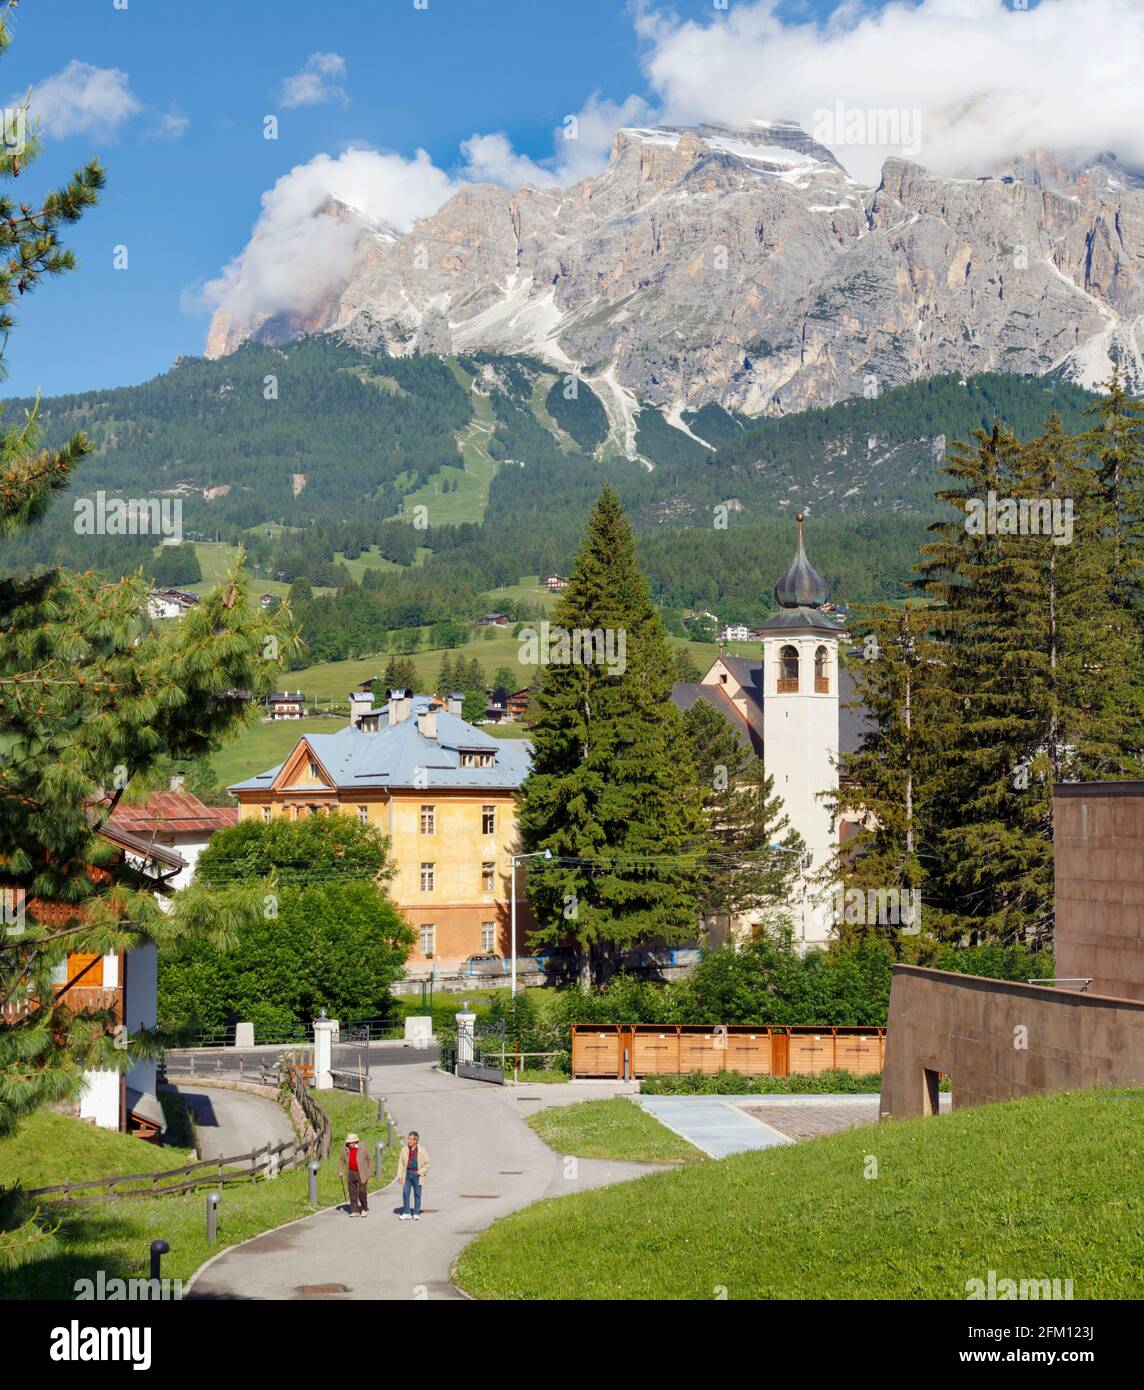 Cortina d'Ampezzo, les Dolomites, province de Belluno, Italie. Banque D'Images